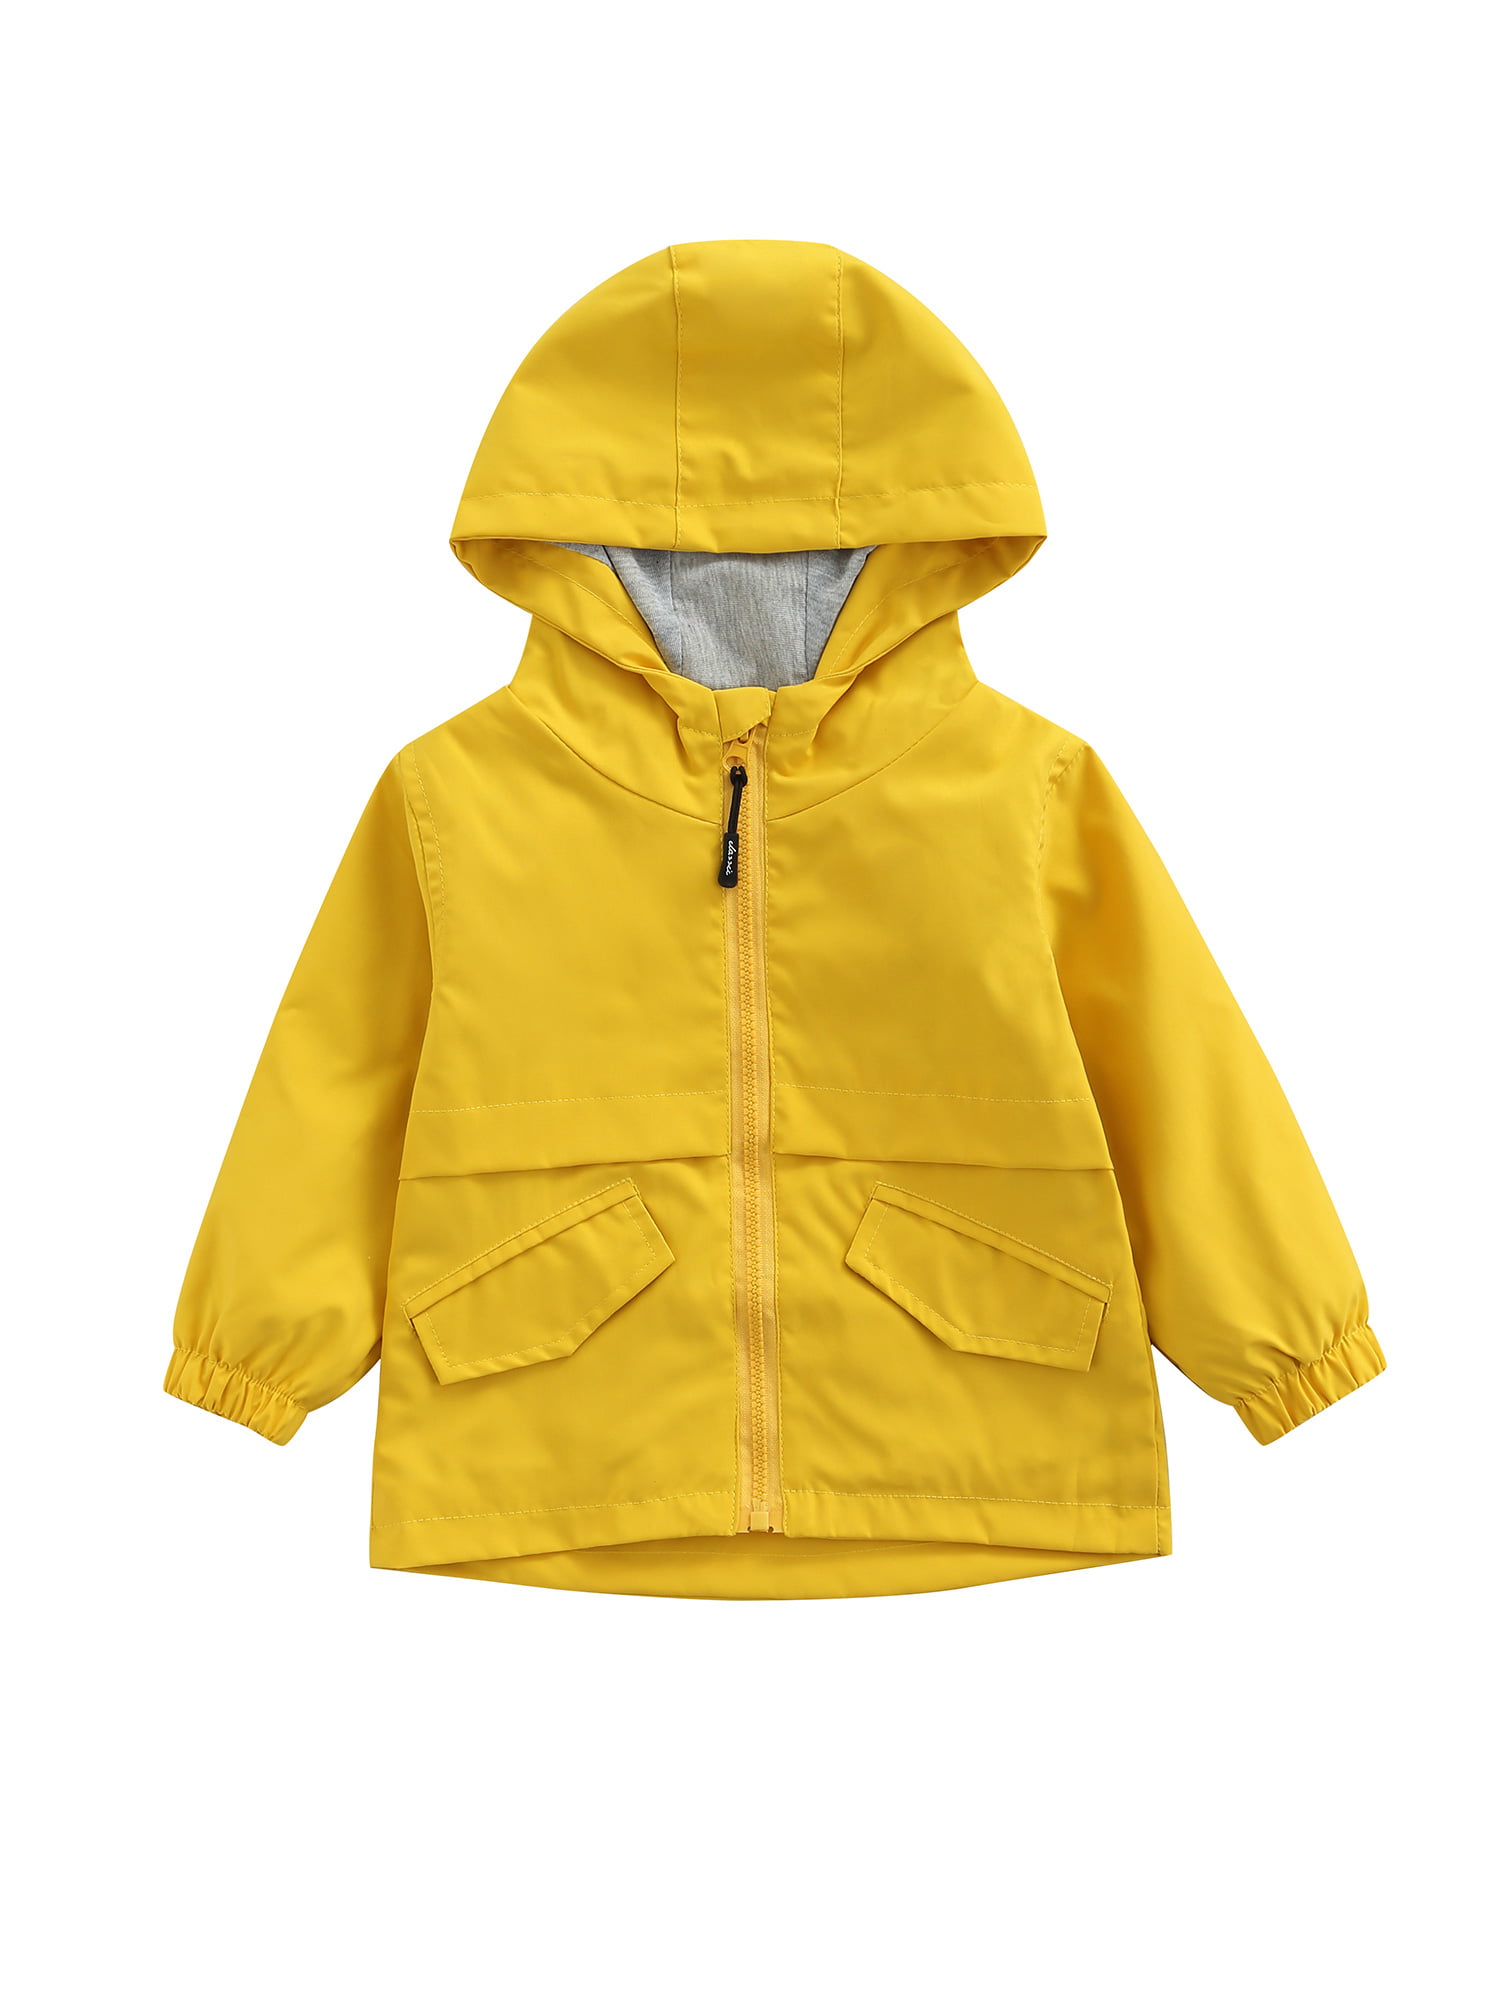 Toddler Raincoat Baby Girl Boy Rain Coat Cartoon Waterproof Lightweight Windbreaker Outwear Hoodie Zipper Rain Jacket 